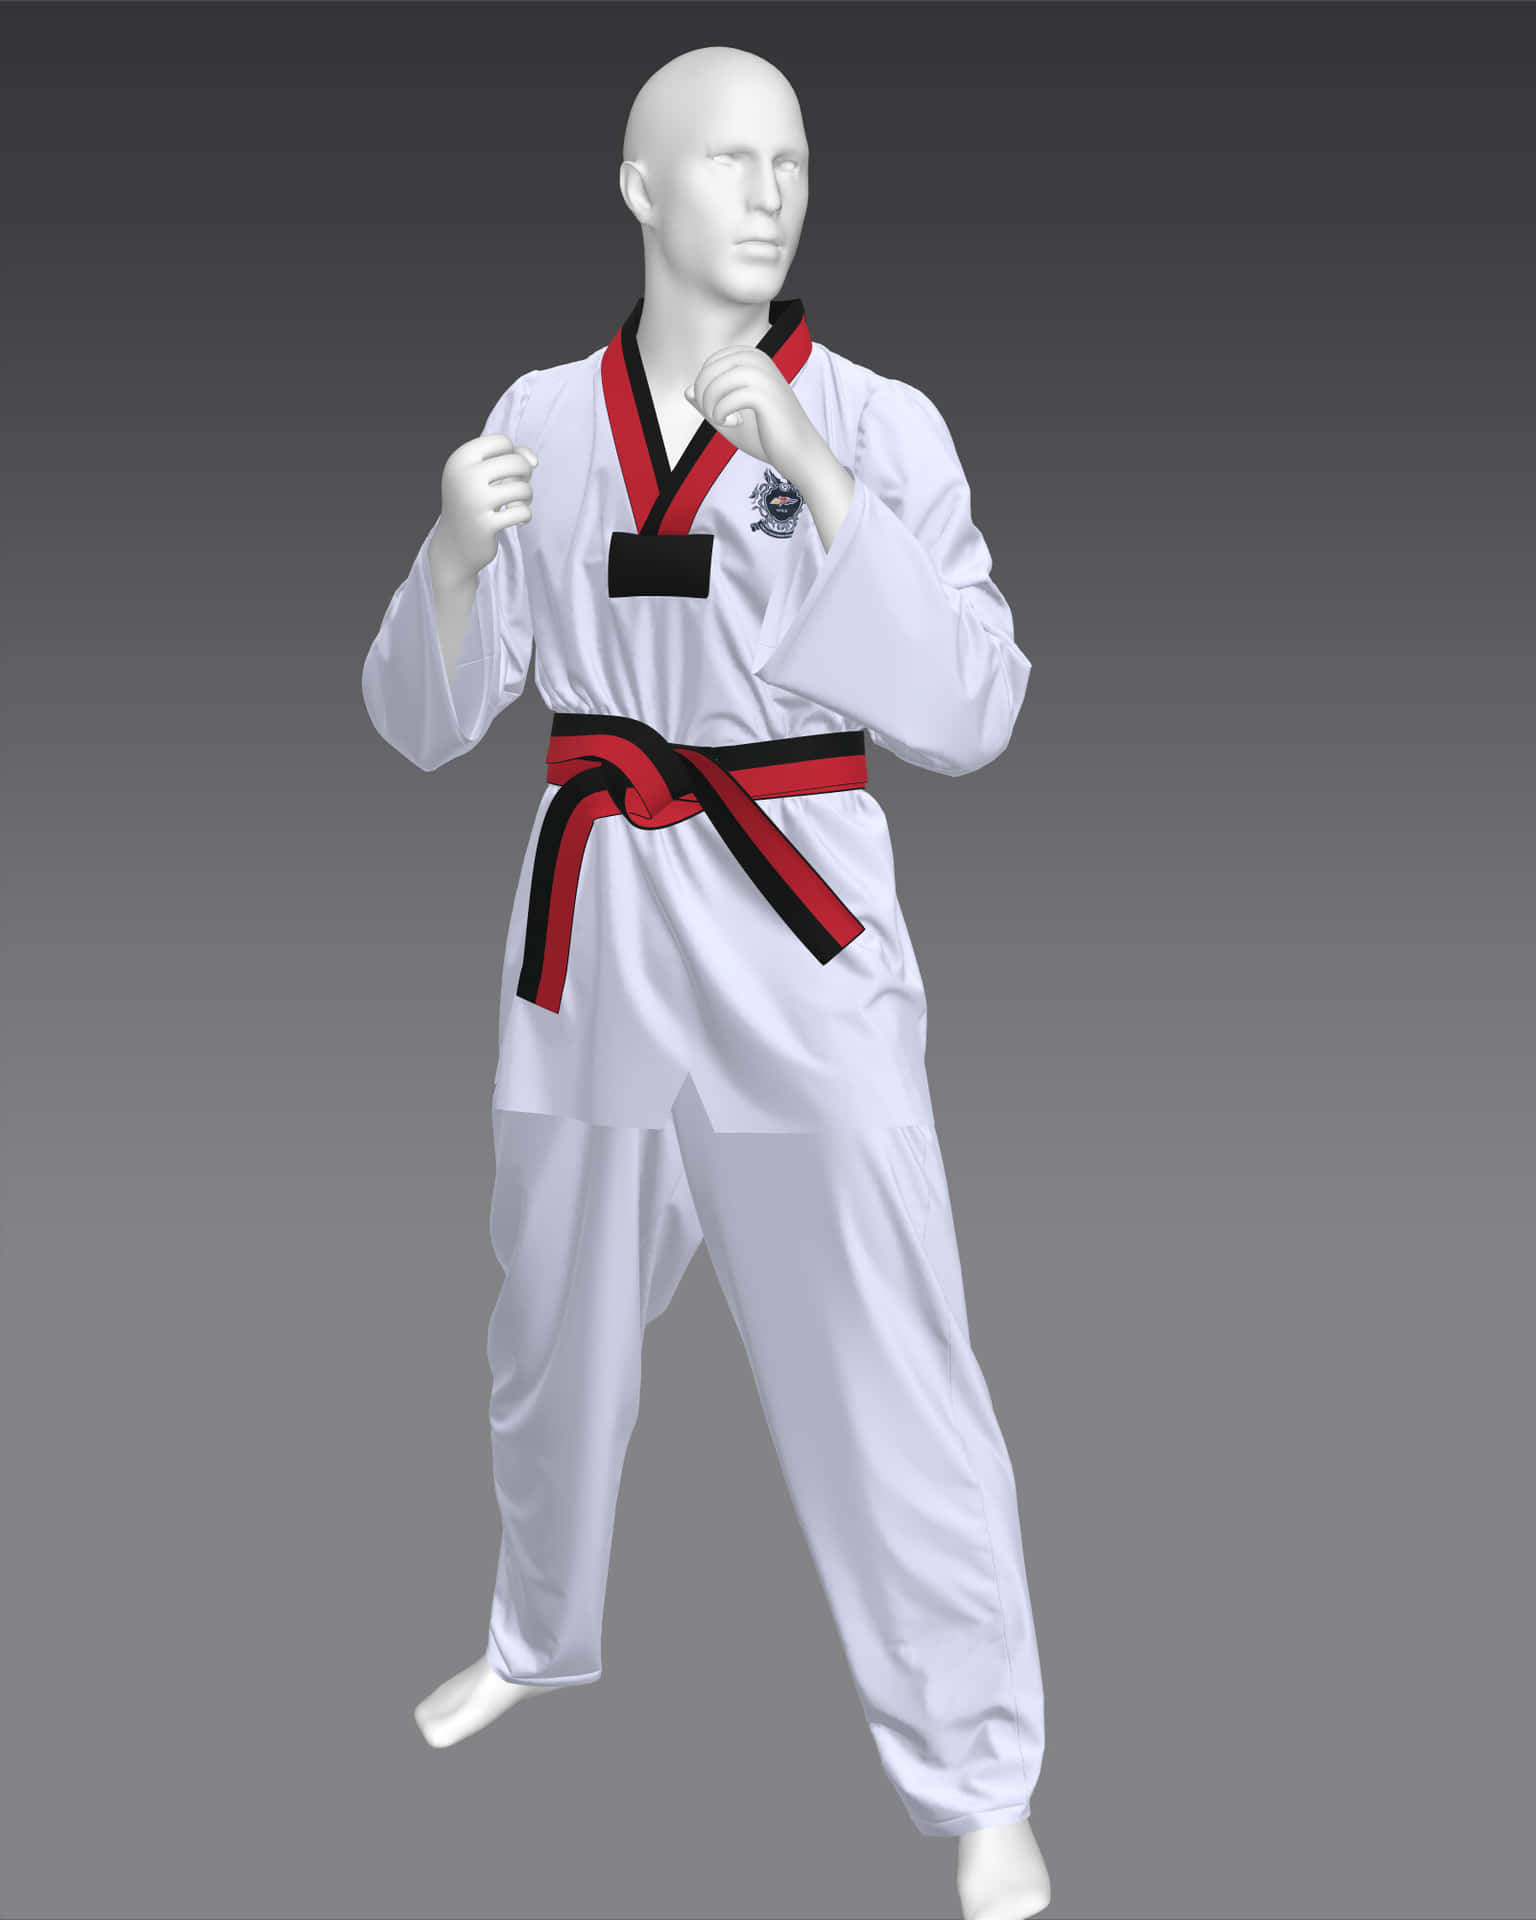 Sporty Taekwondo Uniform to reach your next belt. Wallpaper